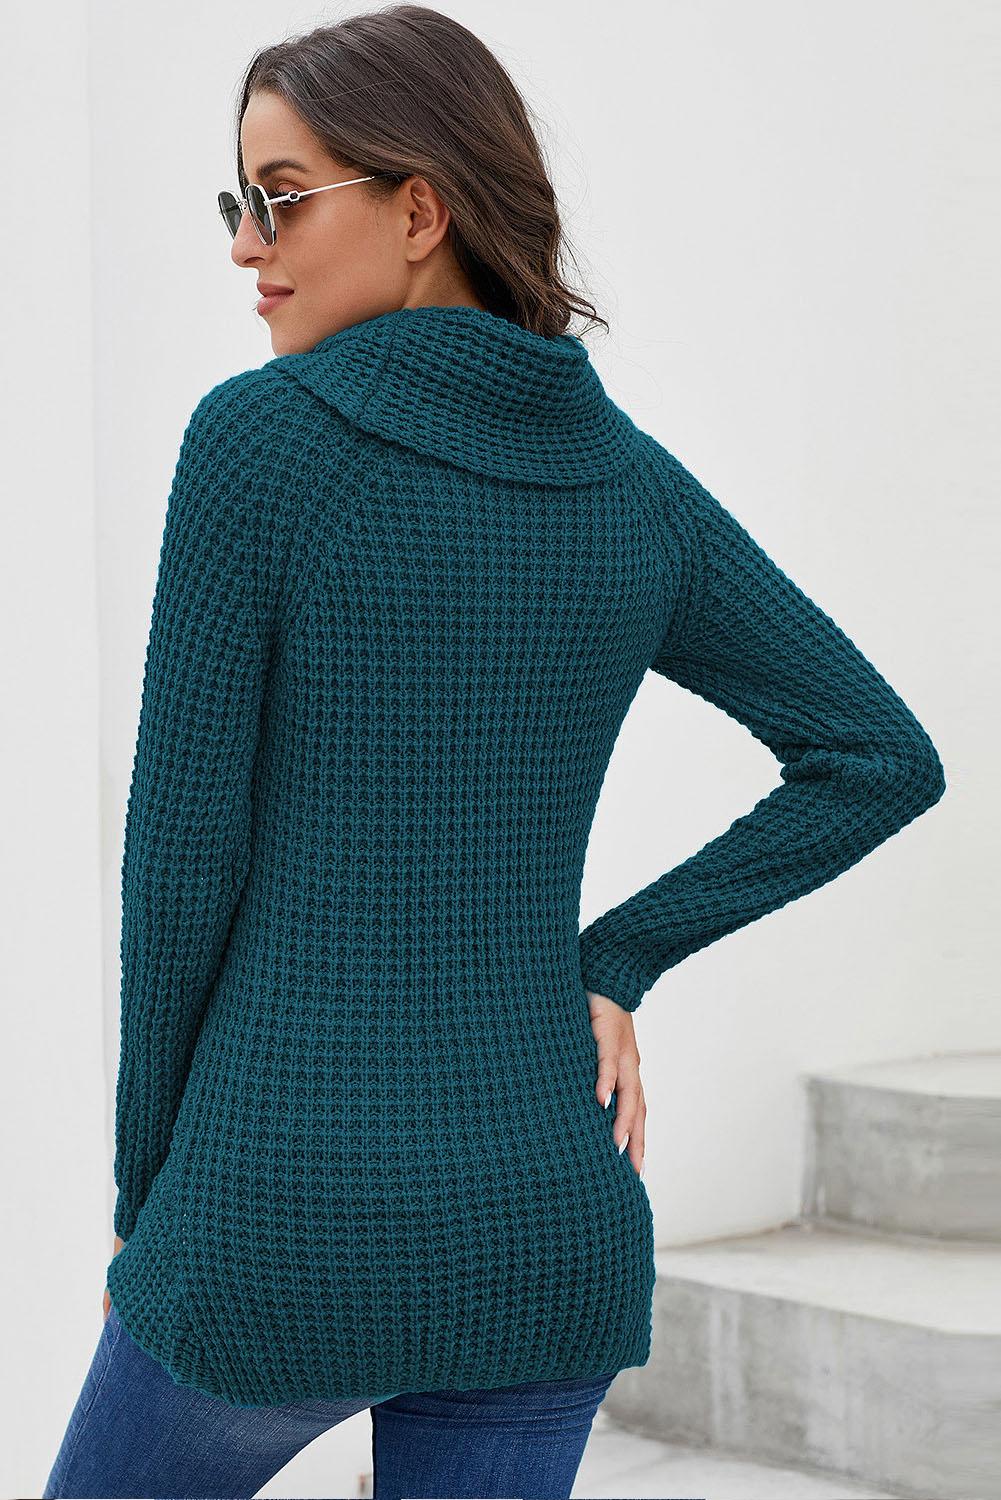 Burgundy Buttoned Wrap Turtleneck Sweater